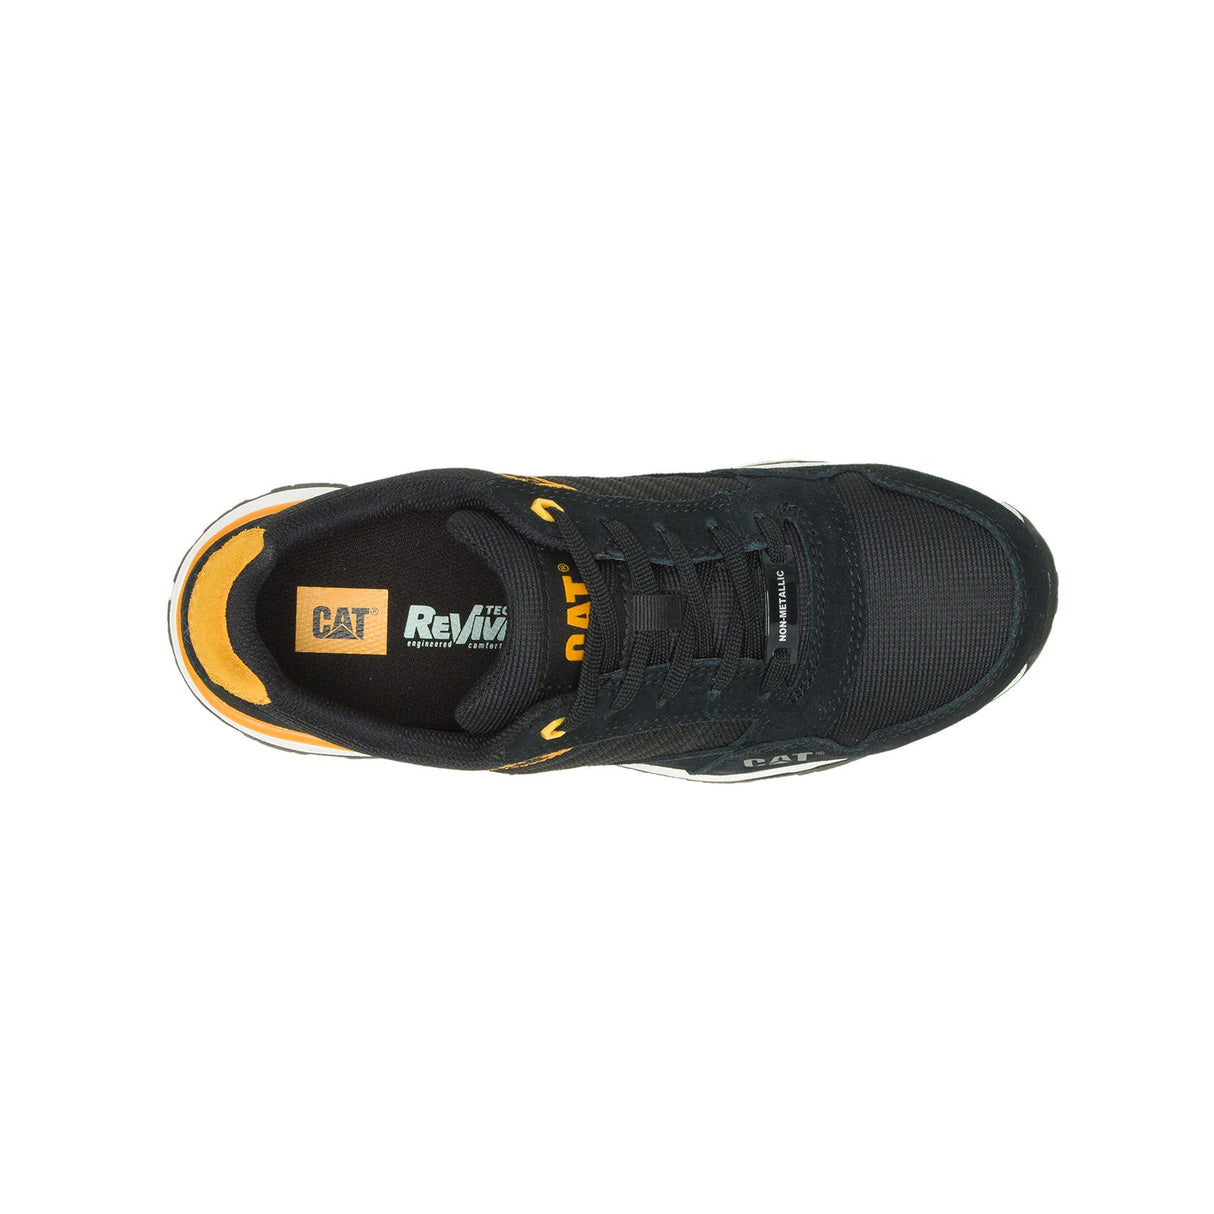 Caterpillar Venward Women's Composite-Toe Work Shoes P91605-7